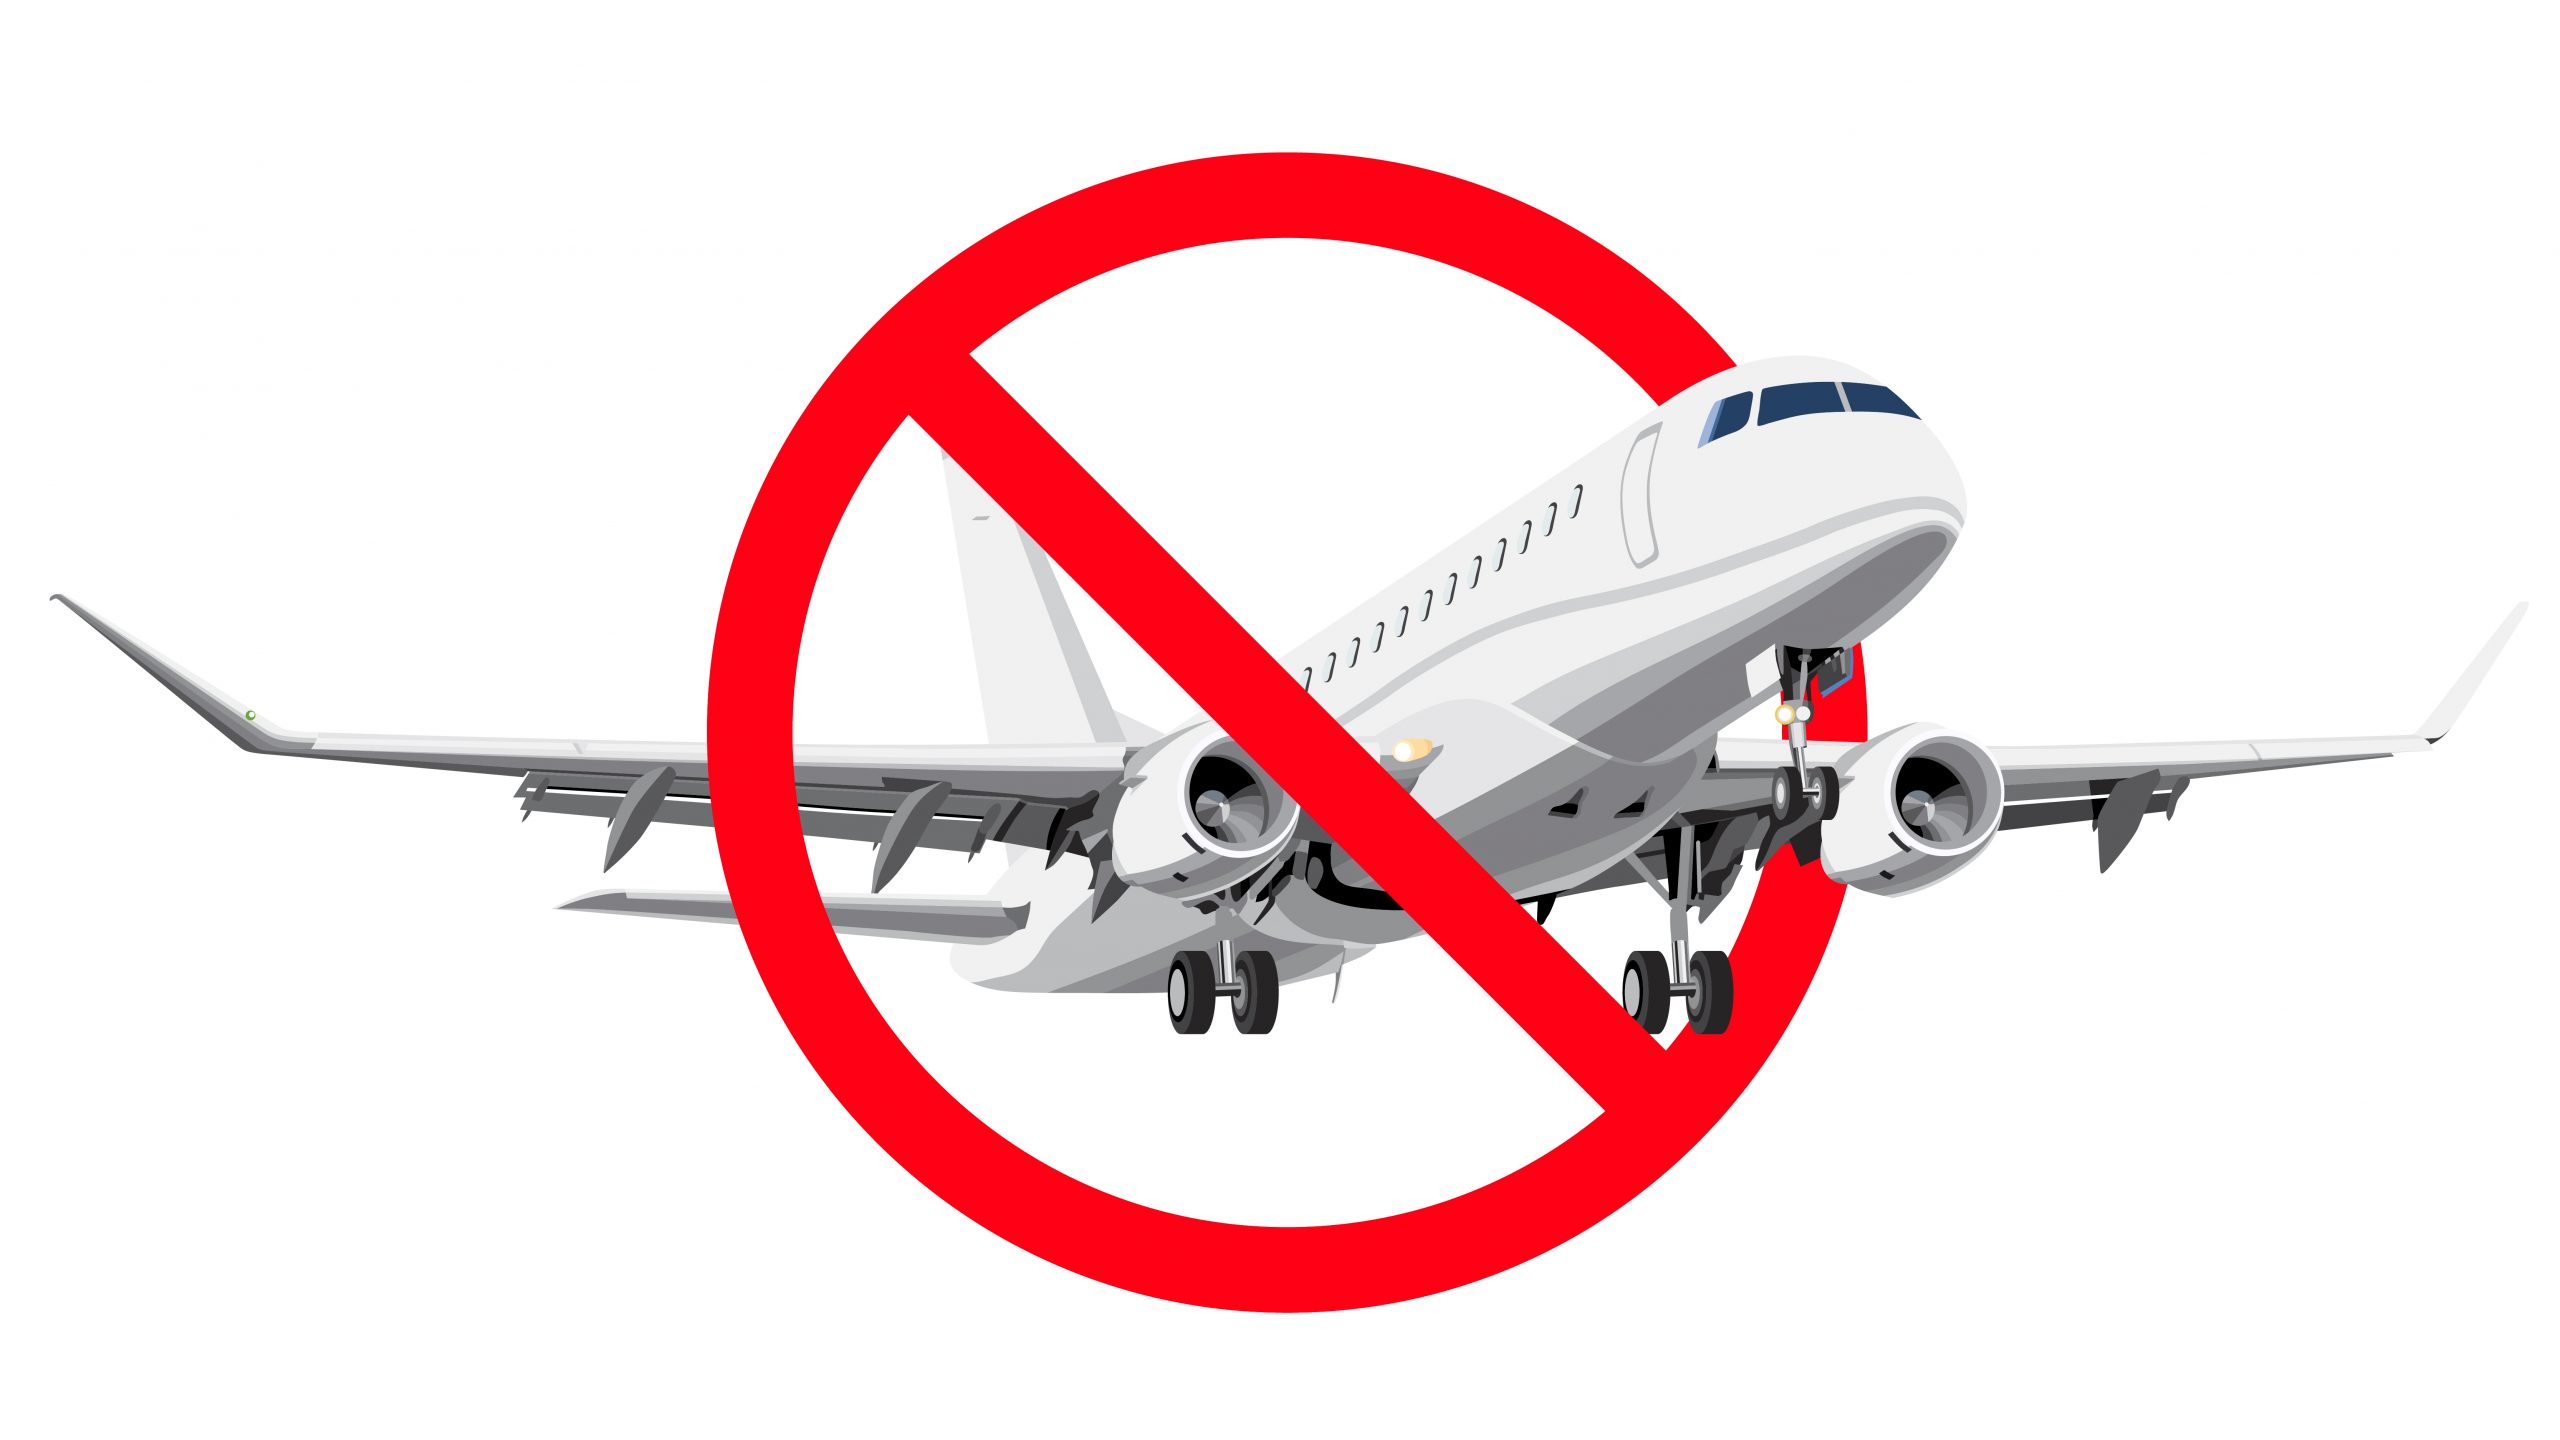 https://depositphotos.com/355846998/stock-illustration-ban-flying-forbidden-sign-with.html